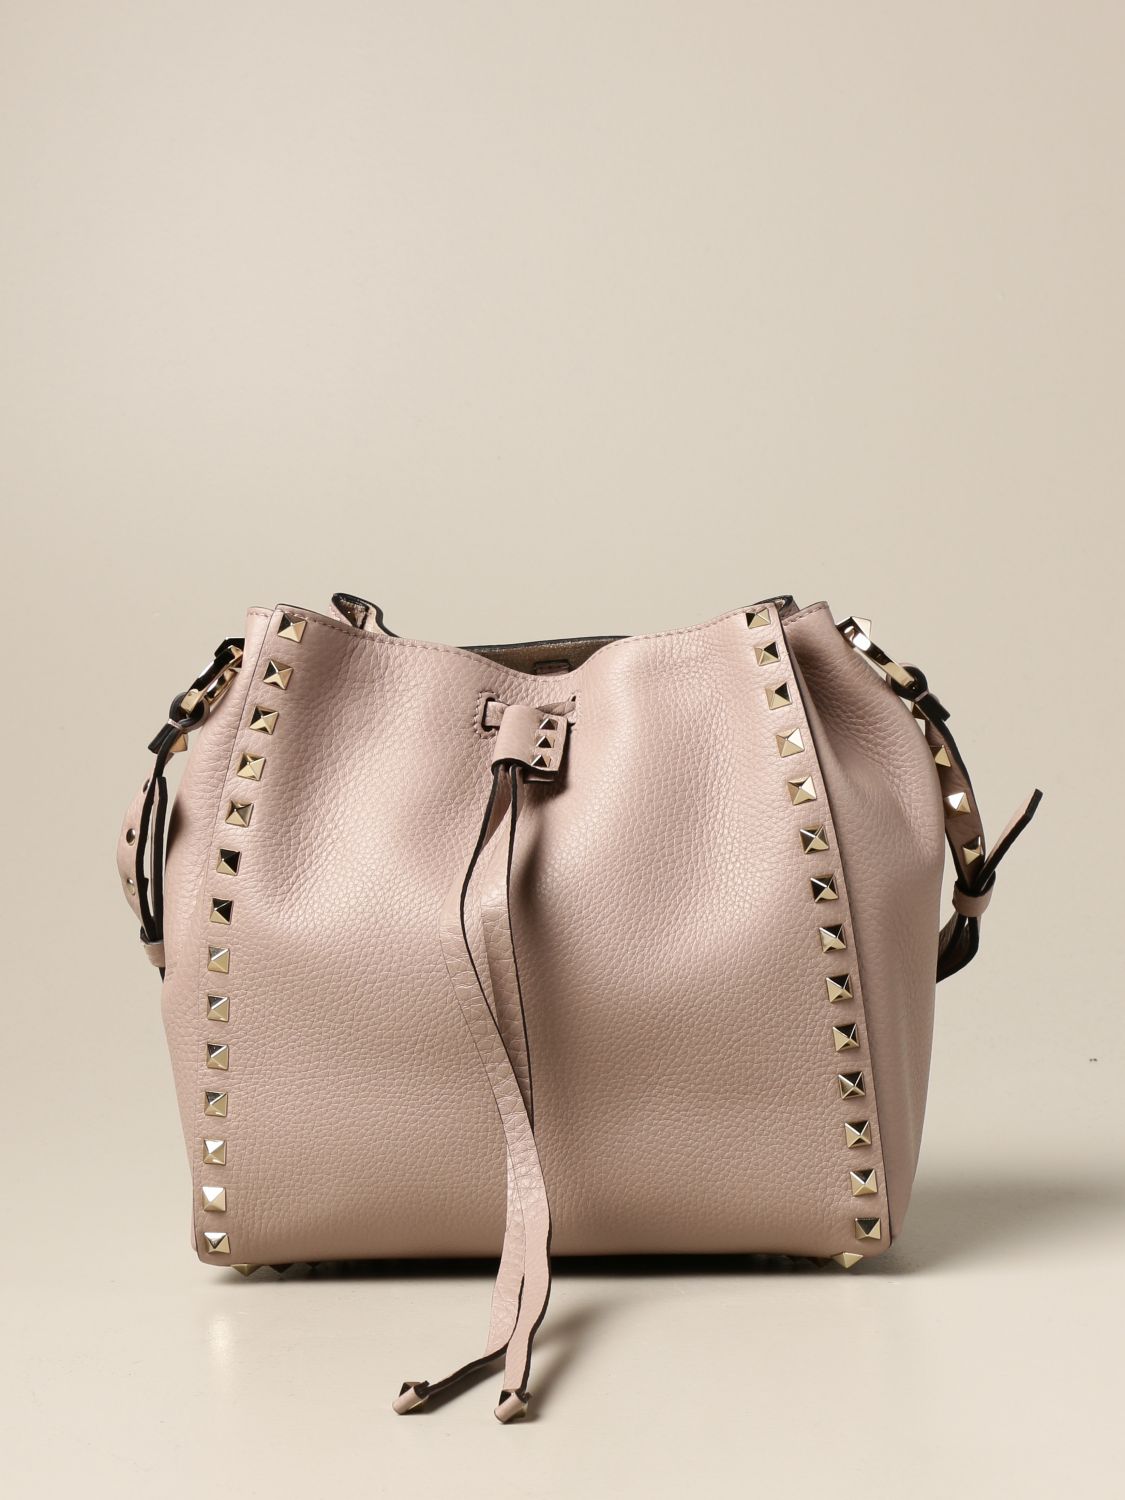 Valentino Garavani Rockstud Textured-leather Shoulder Bag